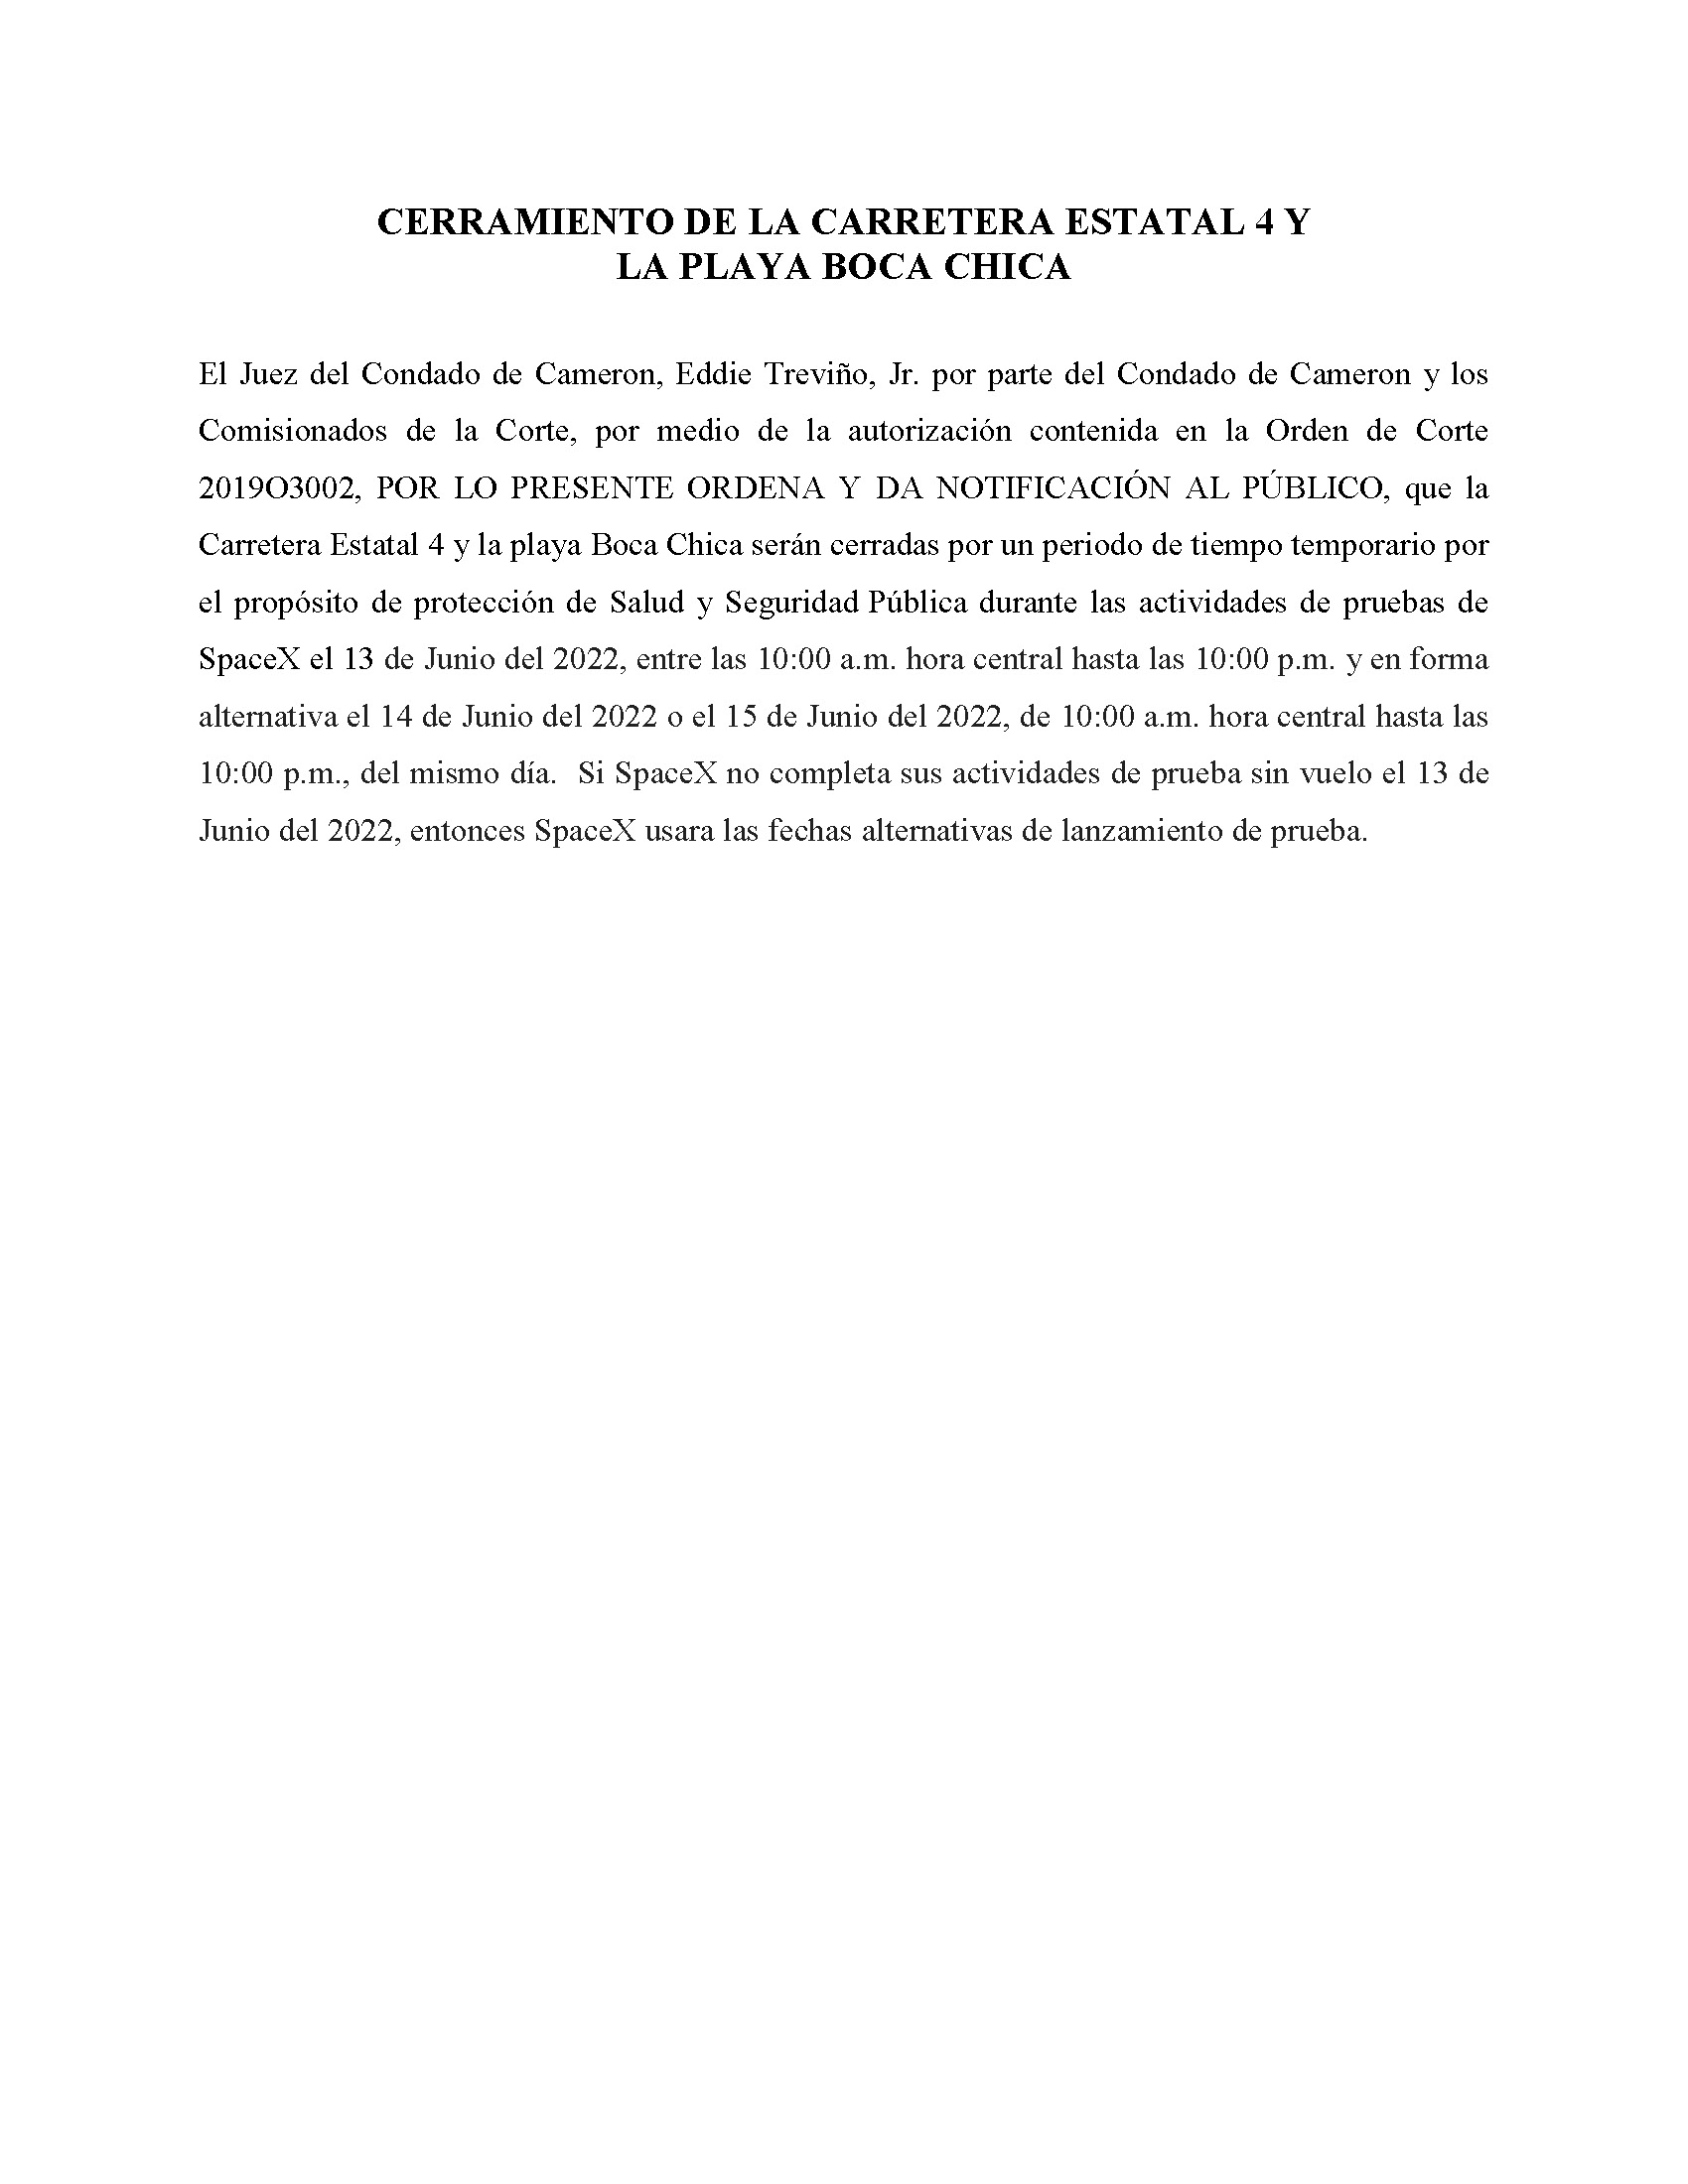 ORDER.CLOSURE OF HIGHWAY 4 Y LA PLAYA BOCA CHICA.SPANISH.06.13.2022